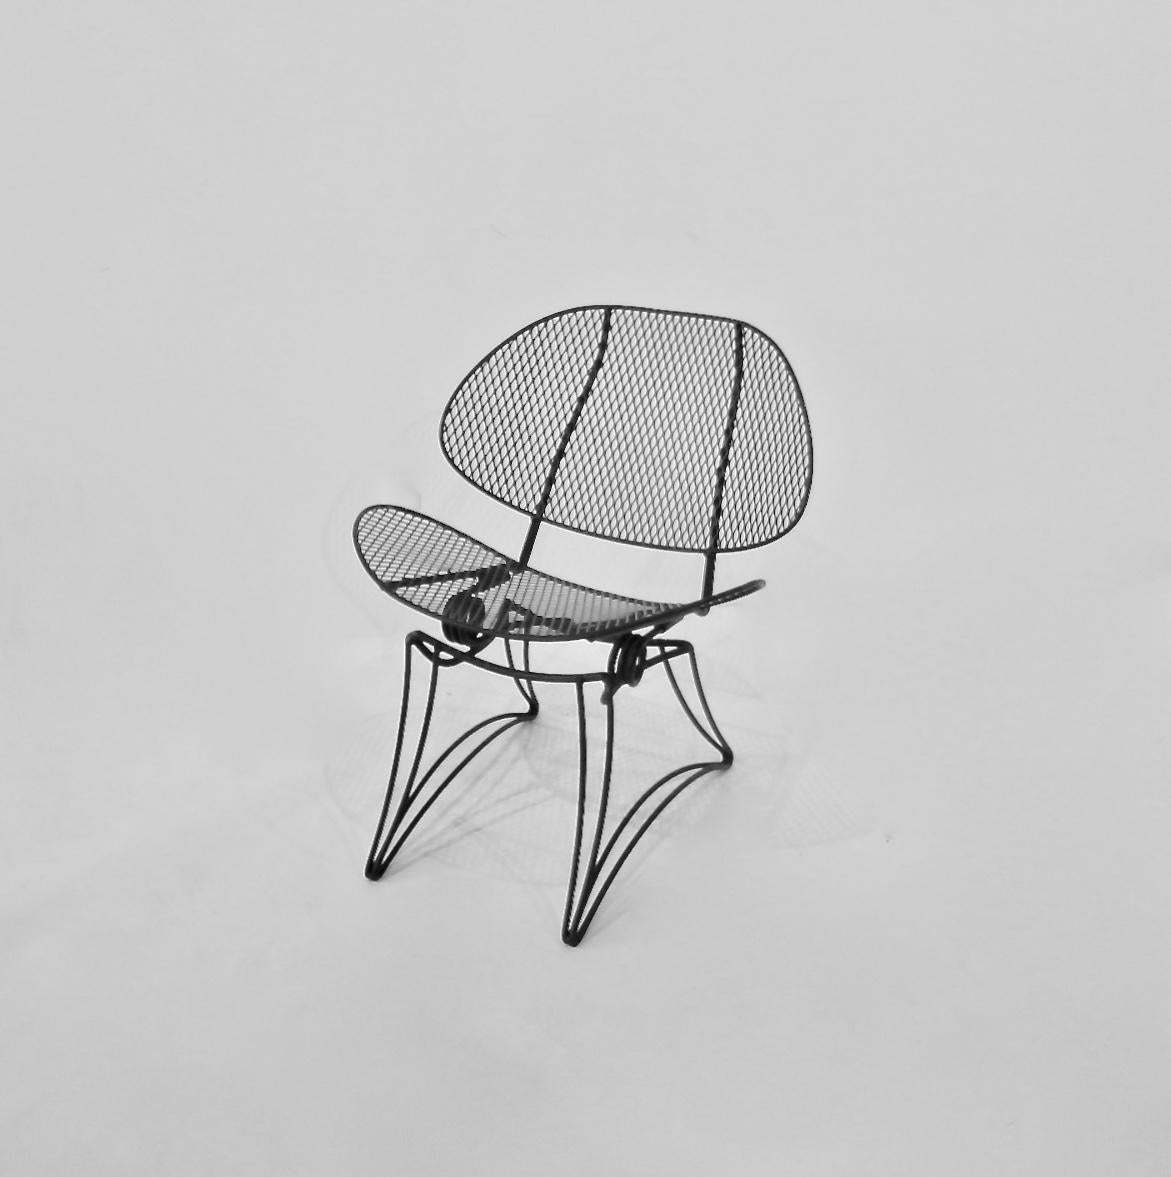 wrought iron rocking chair for sale -china -b2b -forum -blog -wikipedia -.cn -.gov -alibaba